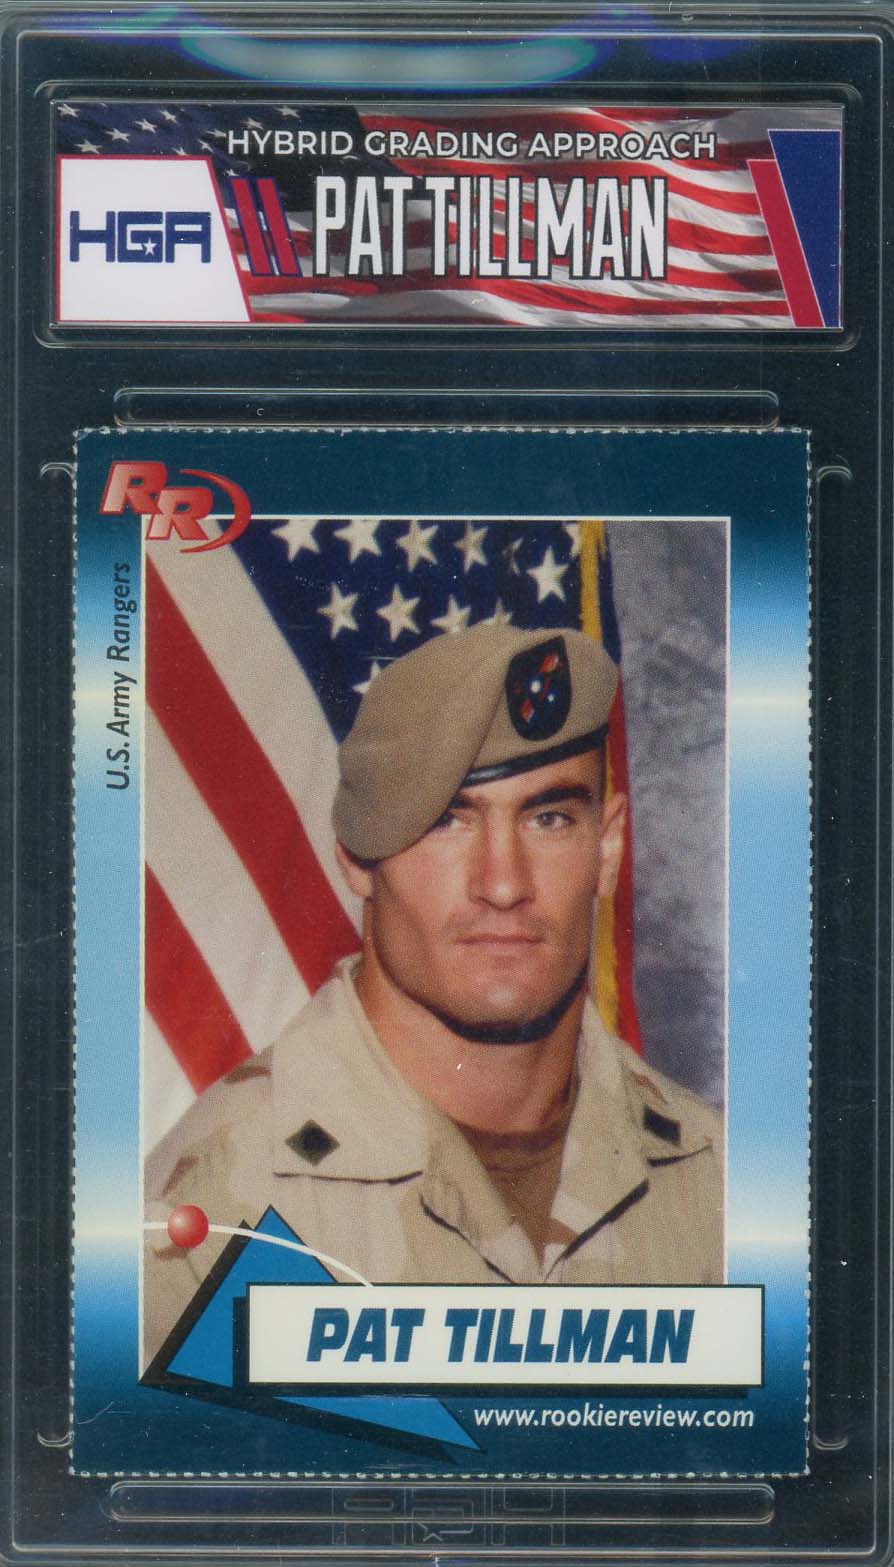 Pat Tillman 2004 Rookie Review US Army Rangers Card #95 HGA-Powers Sports Memorabilia